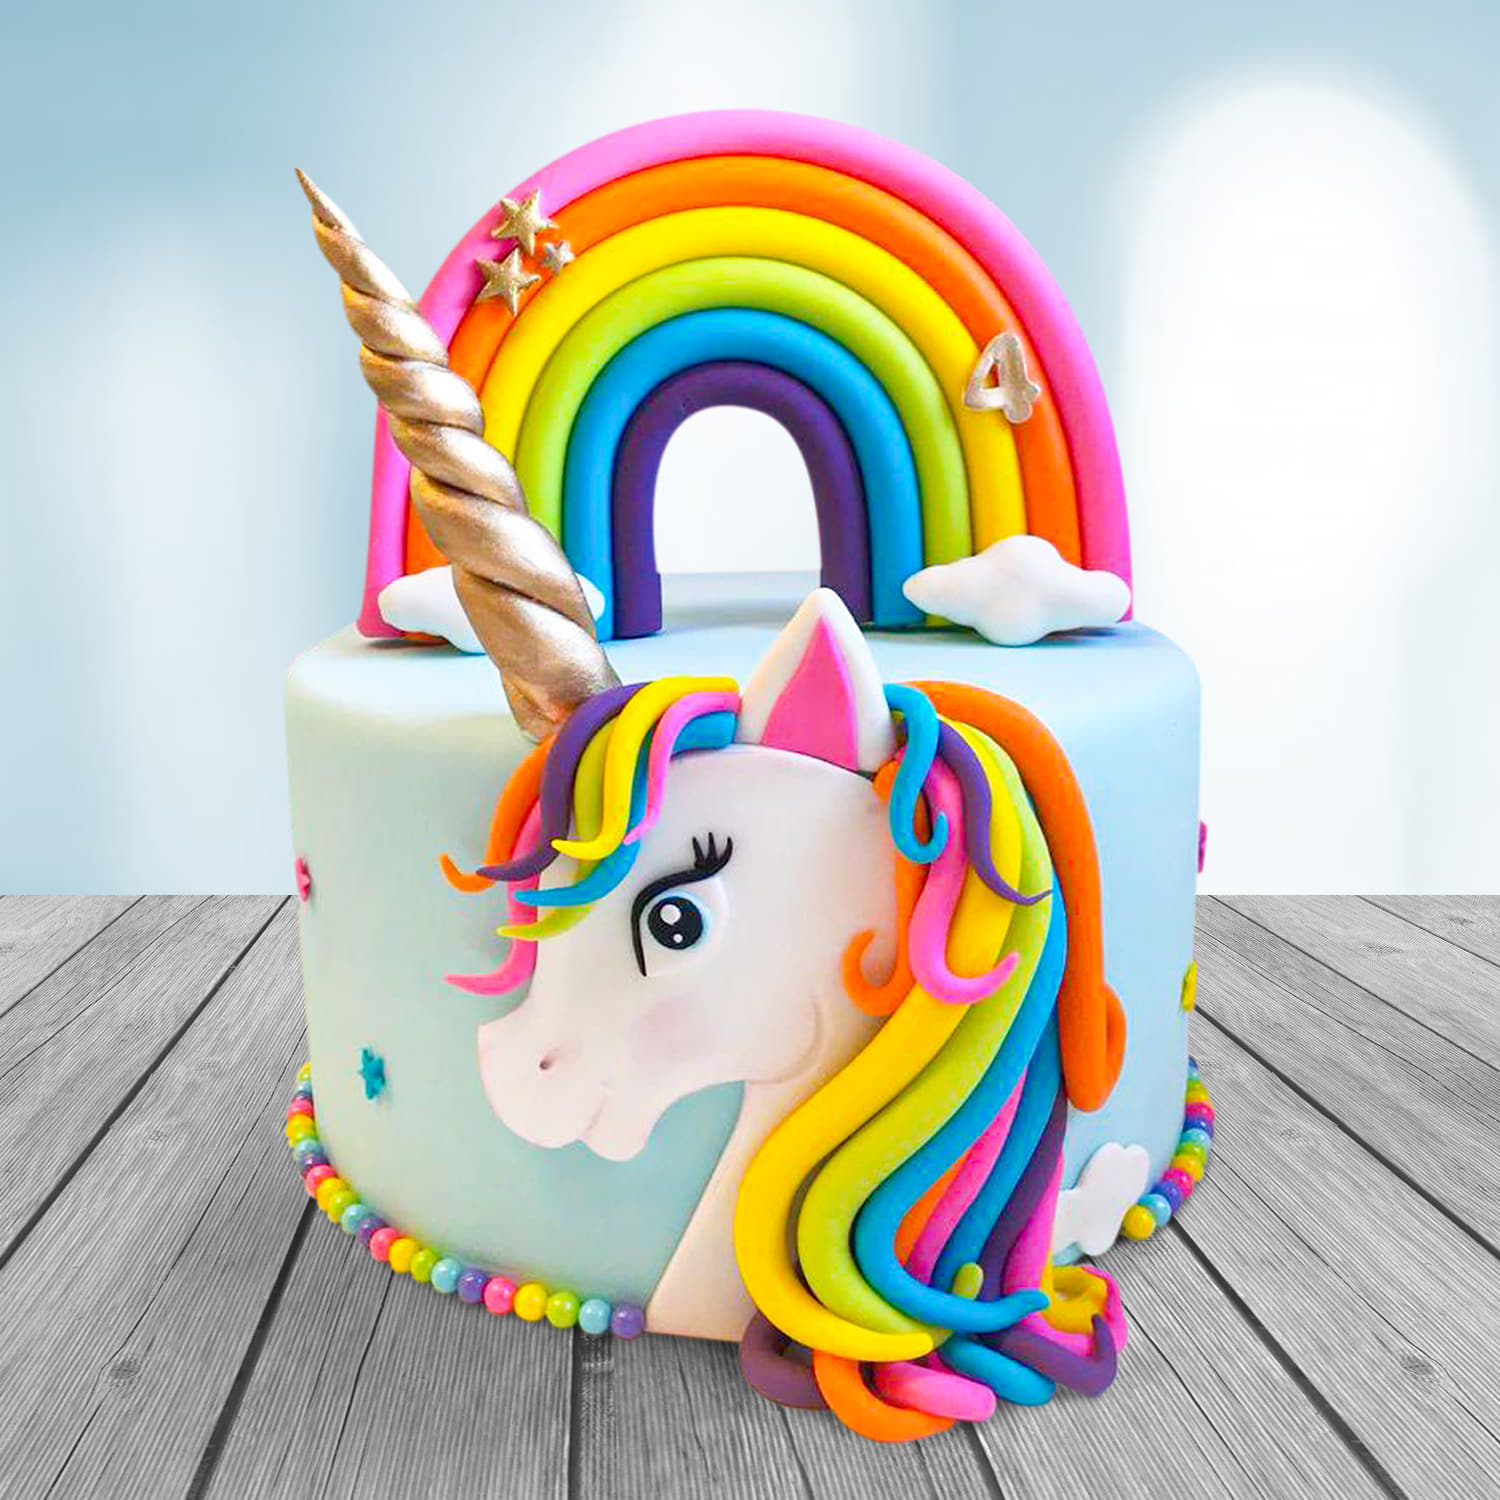 Charné's Unicorn Surprise Cake - The Taste Master - Reality TV Show - SABC 3